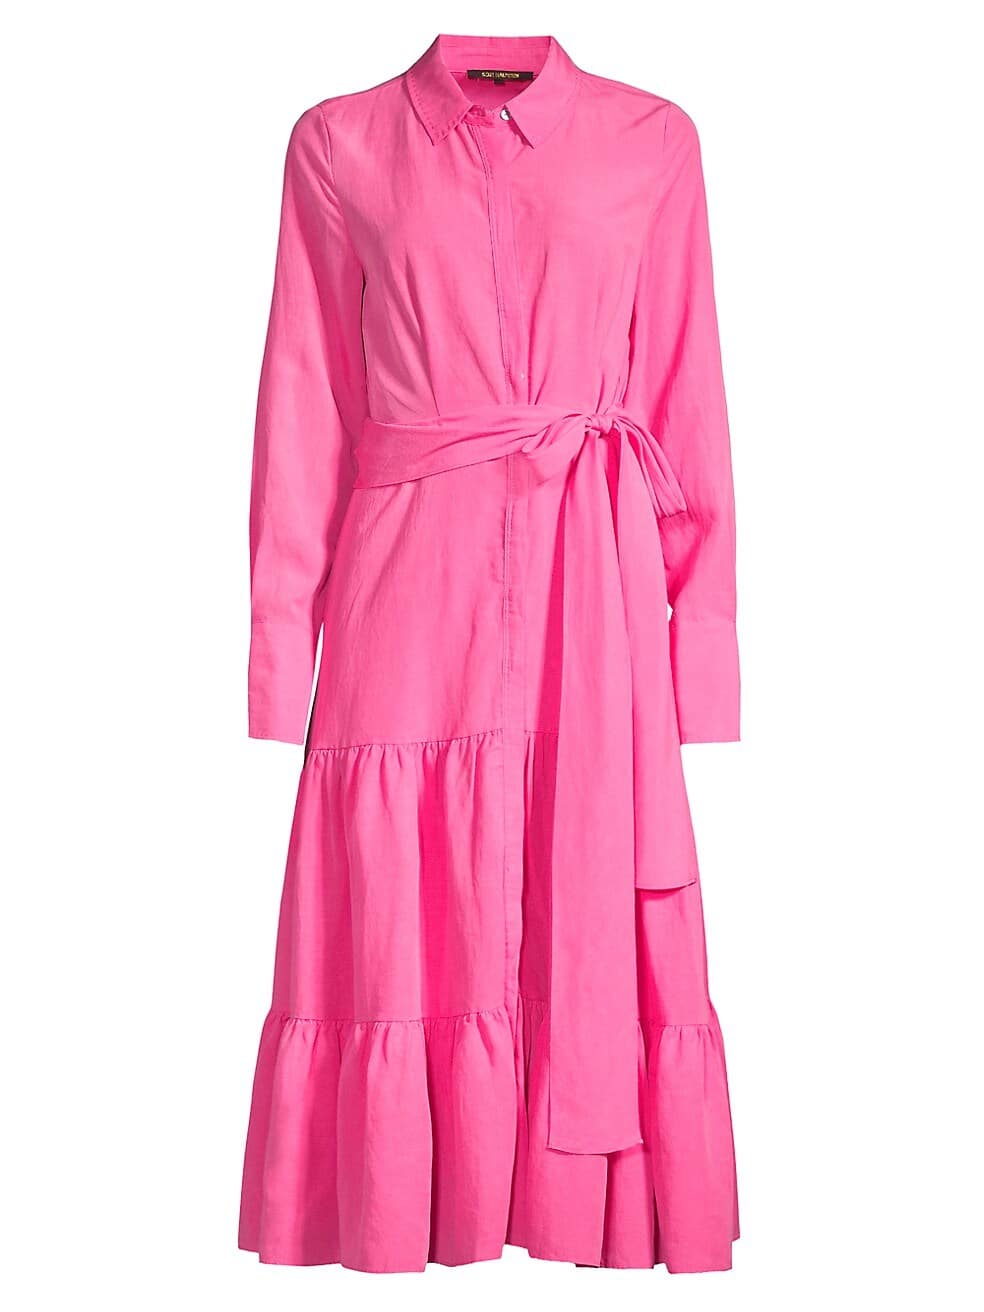 Saks Fifth Ave 25% Off Friends and Family sale - Spring dresses - pink dress - Kobi Halperin - restrained elegance